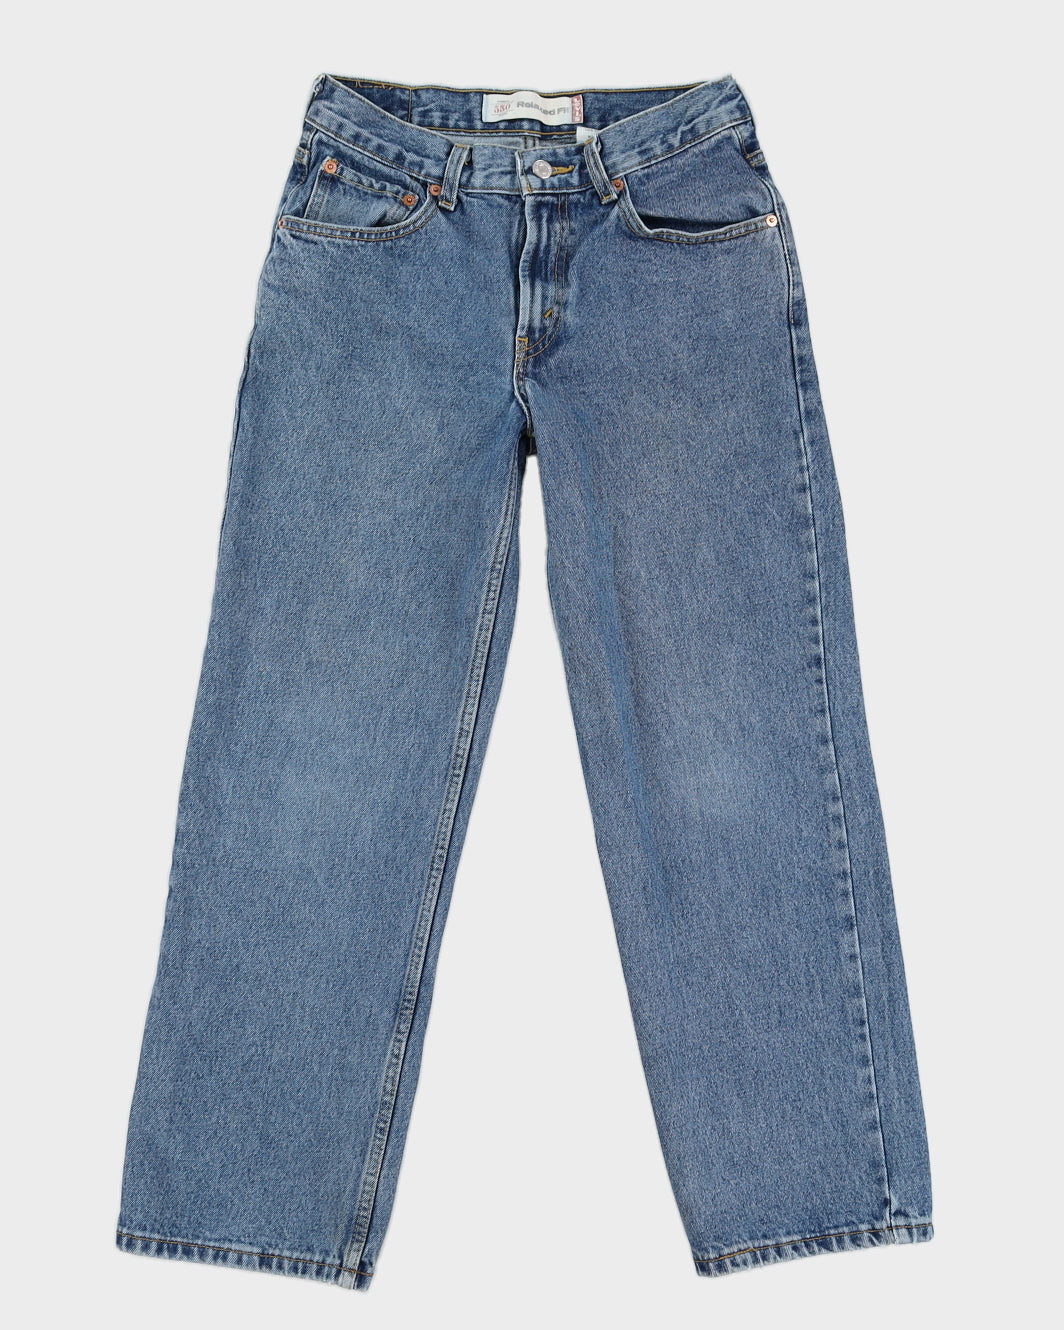 Vintage 00s Levi's 550 Medium Wash Denim Jeans - W28 L28